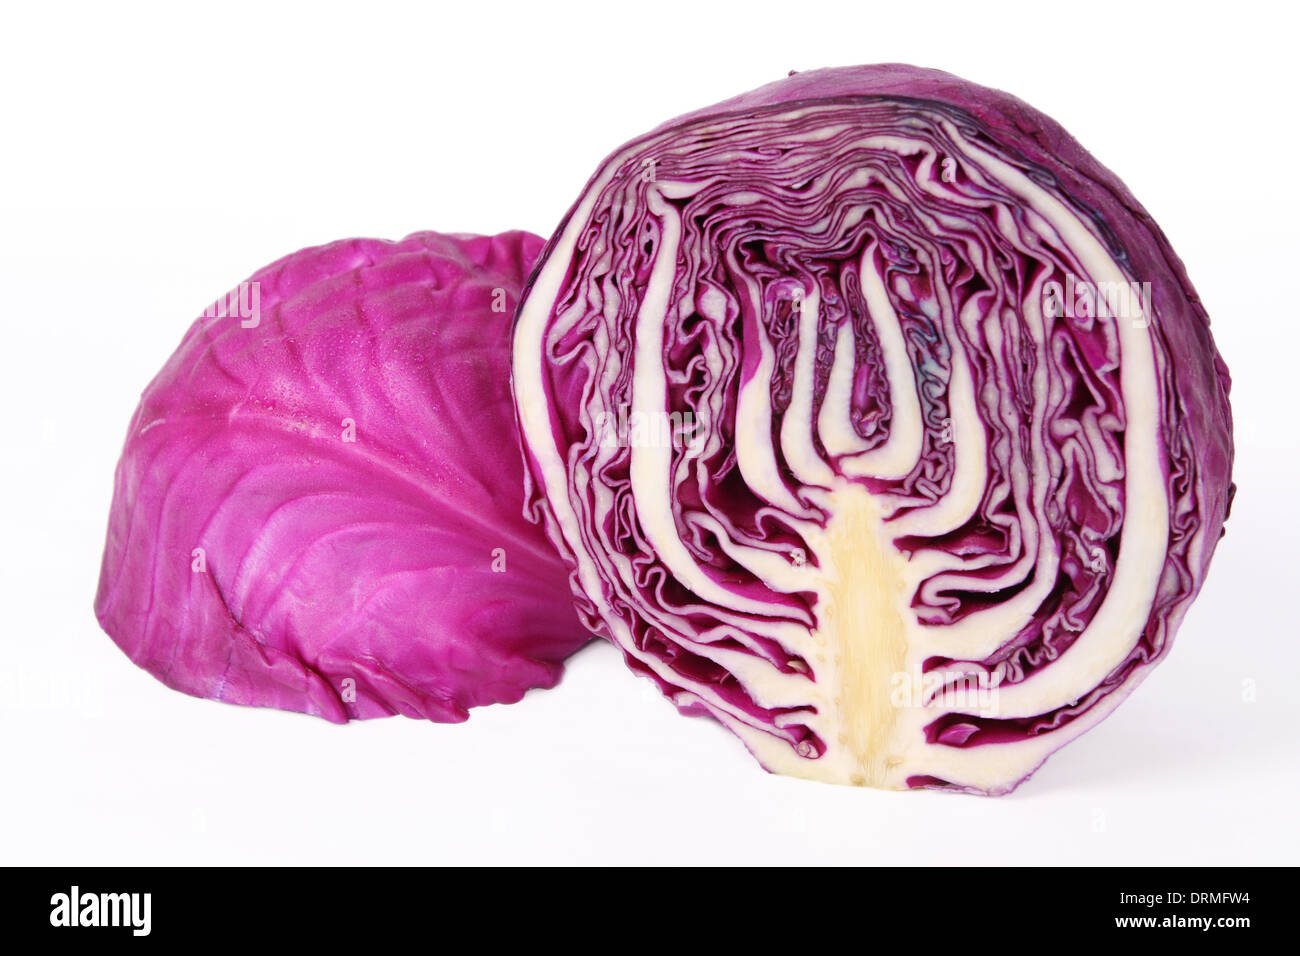 purple cabbage Stock Photo